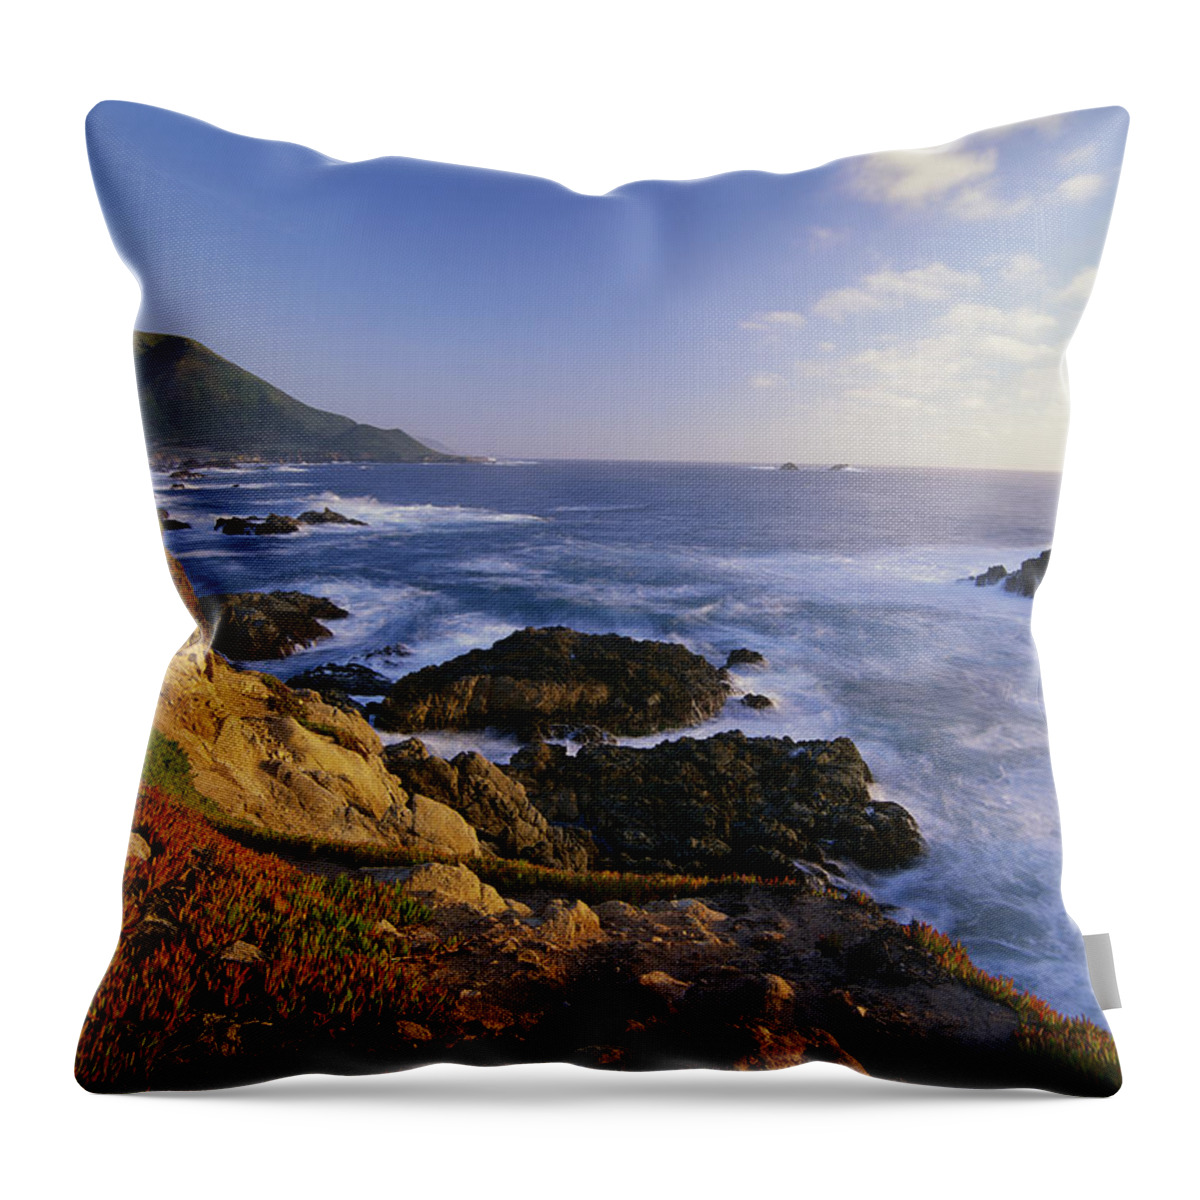 00174722 Throw Pillow featuring the photograph Coastline Big Sur Garrapata State Beach by Tim Fitzharris